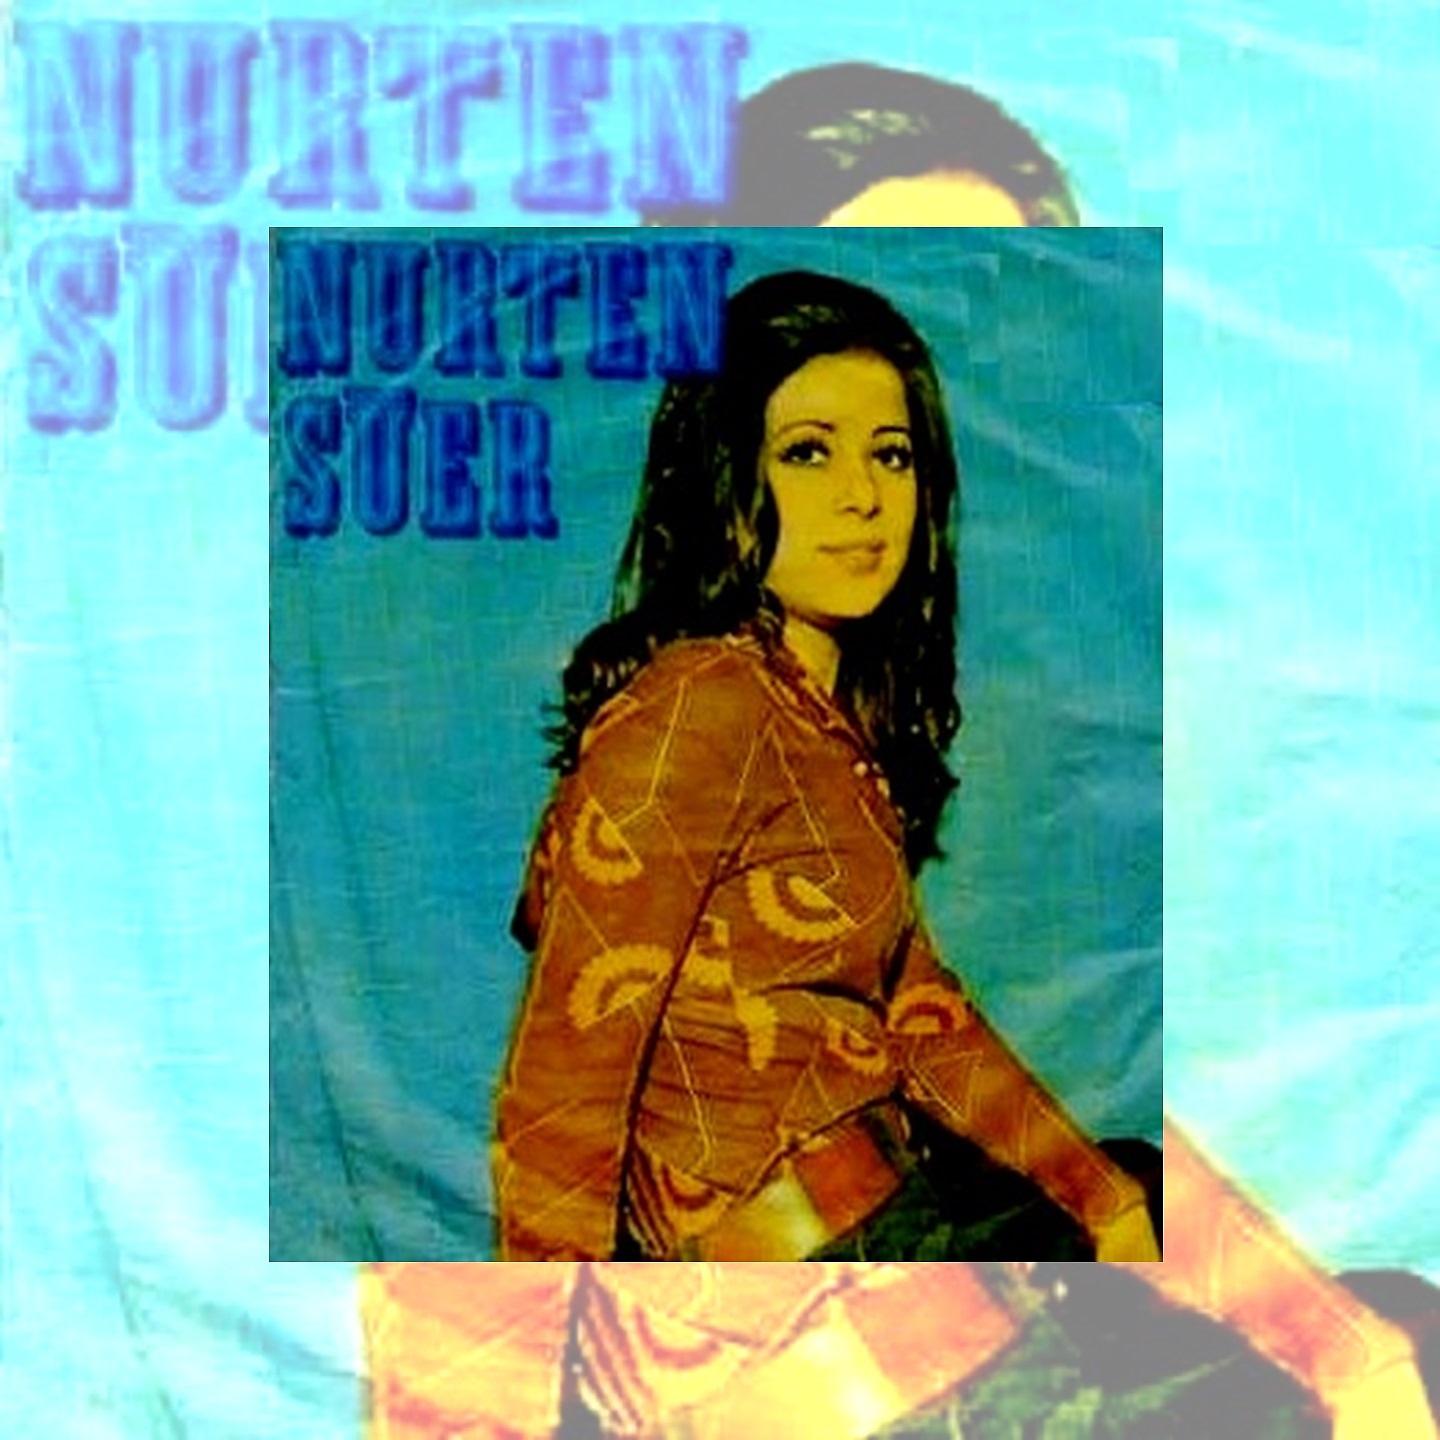 Постер альбома Senden Başka